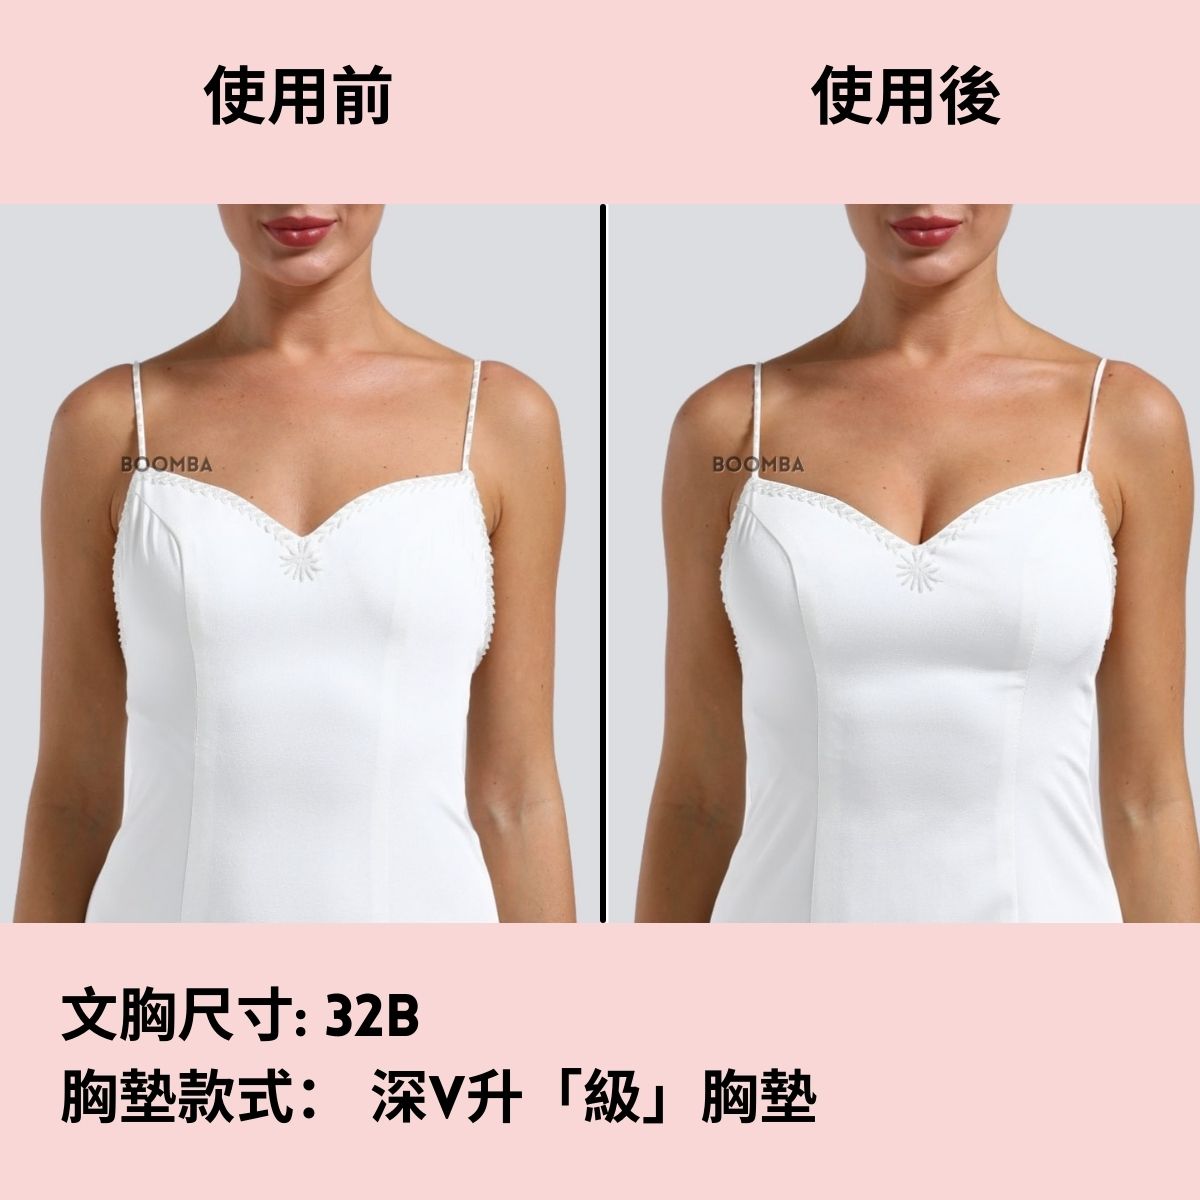 Qoo10 - Boob Tape Breast Lift Tape Adhesive Bra Nipple Cover,Bare